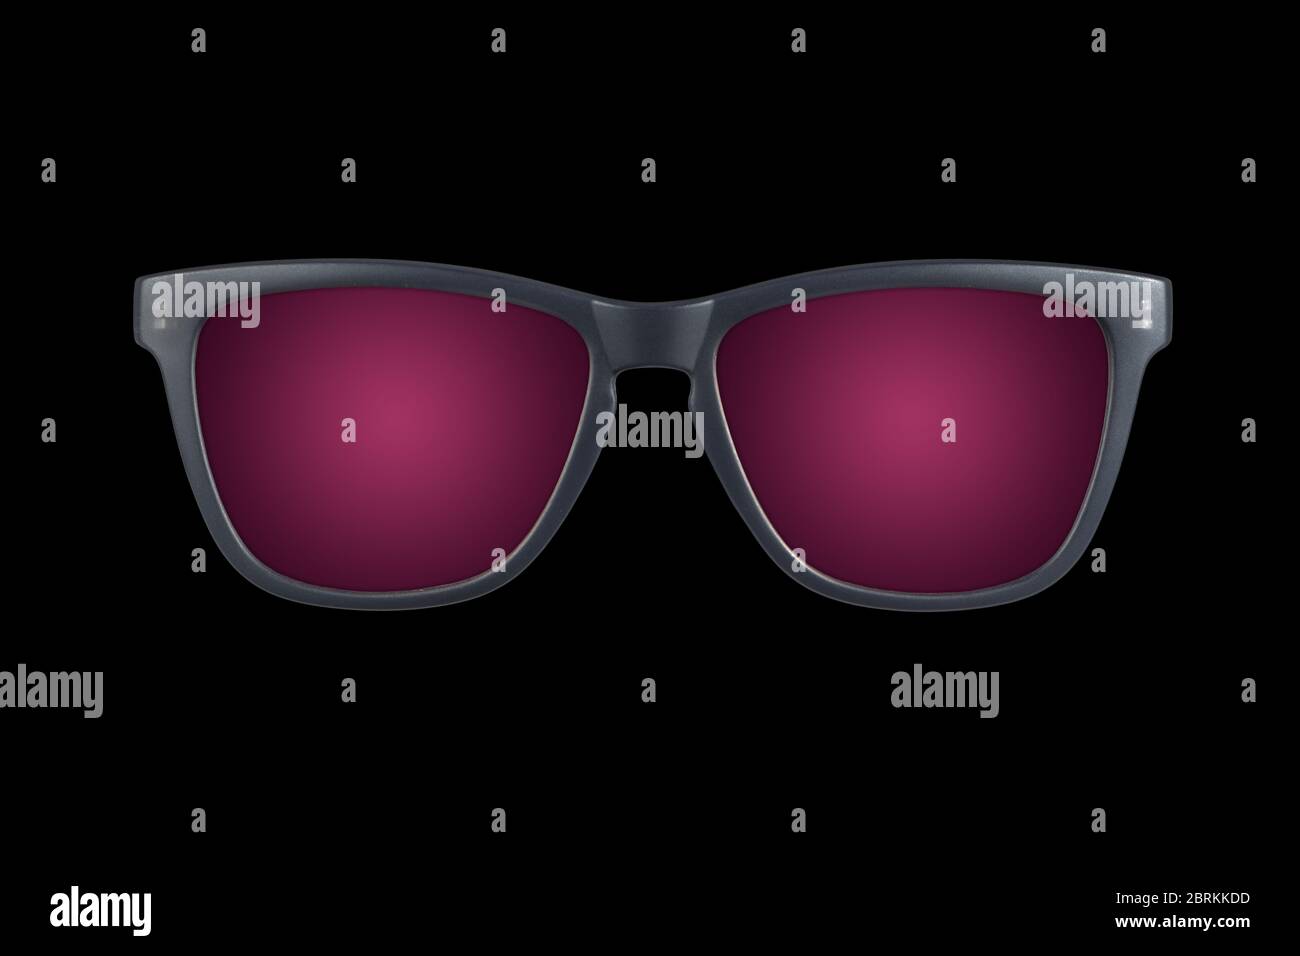 Grey sunglasses with purple lenses on black background Stock Photo